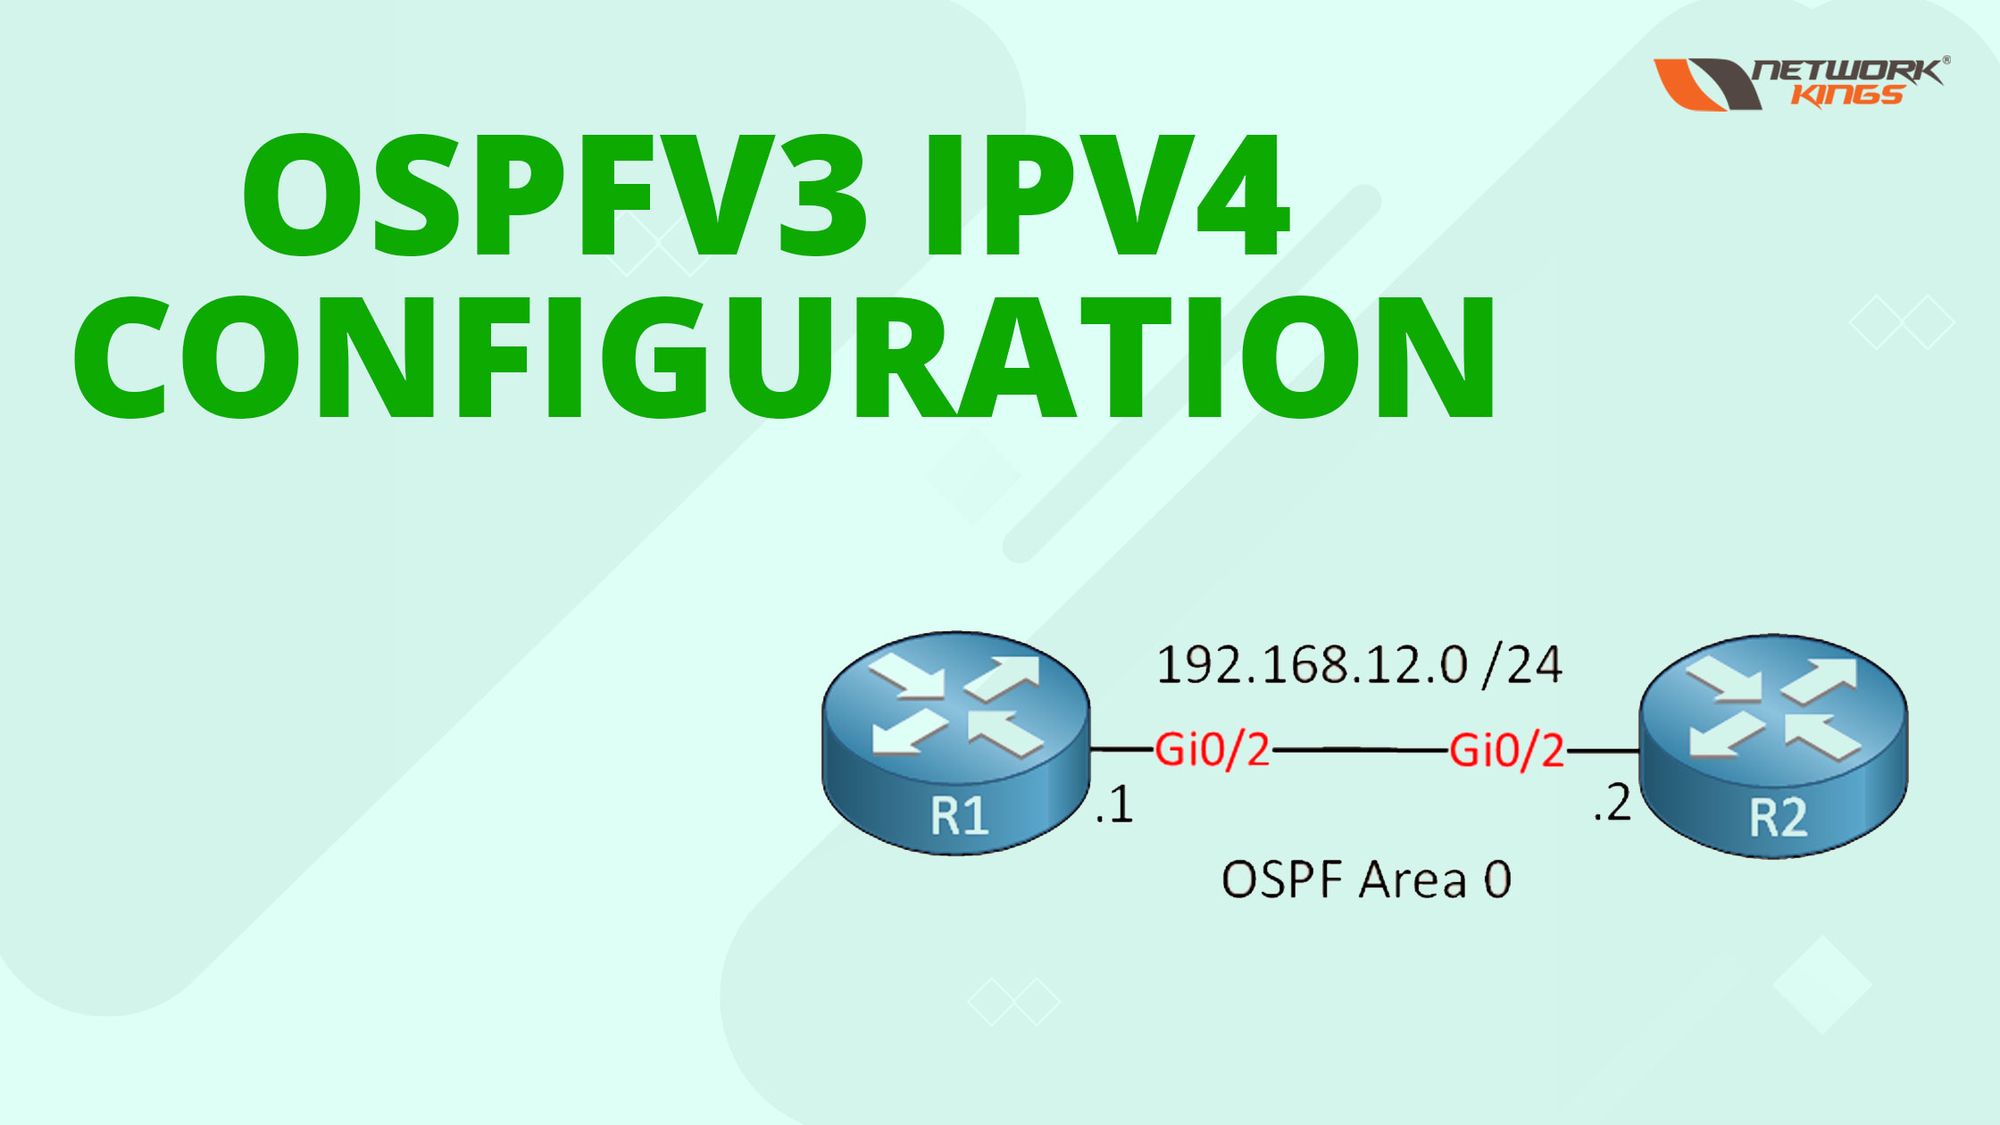 Ospfv3 ipv4 configuration